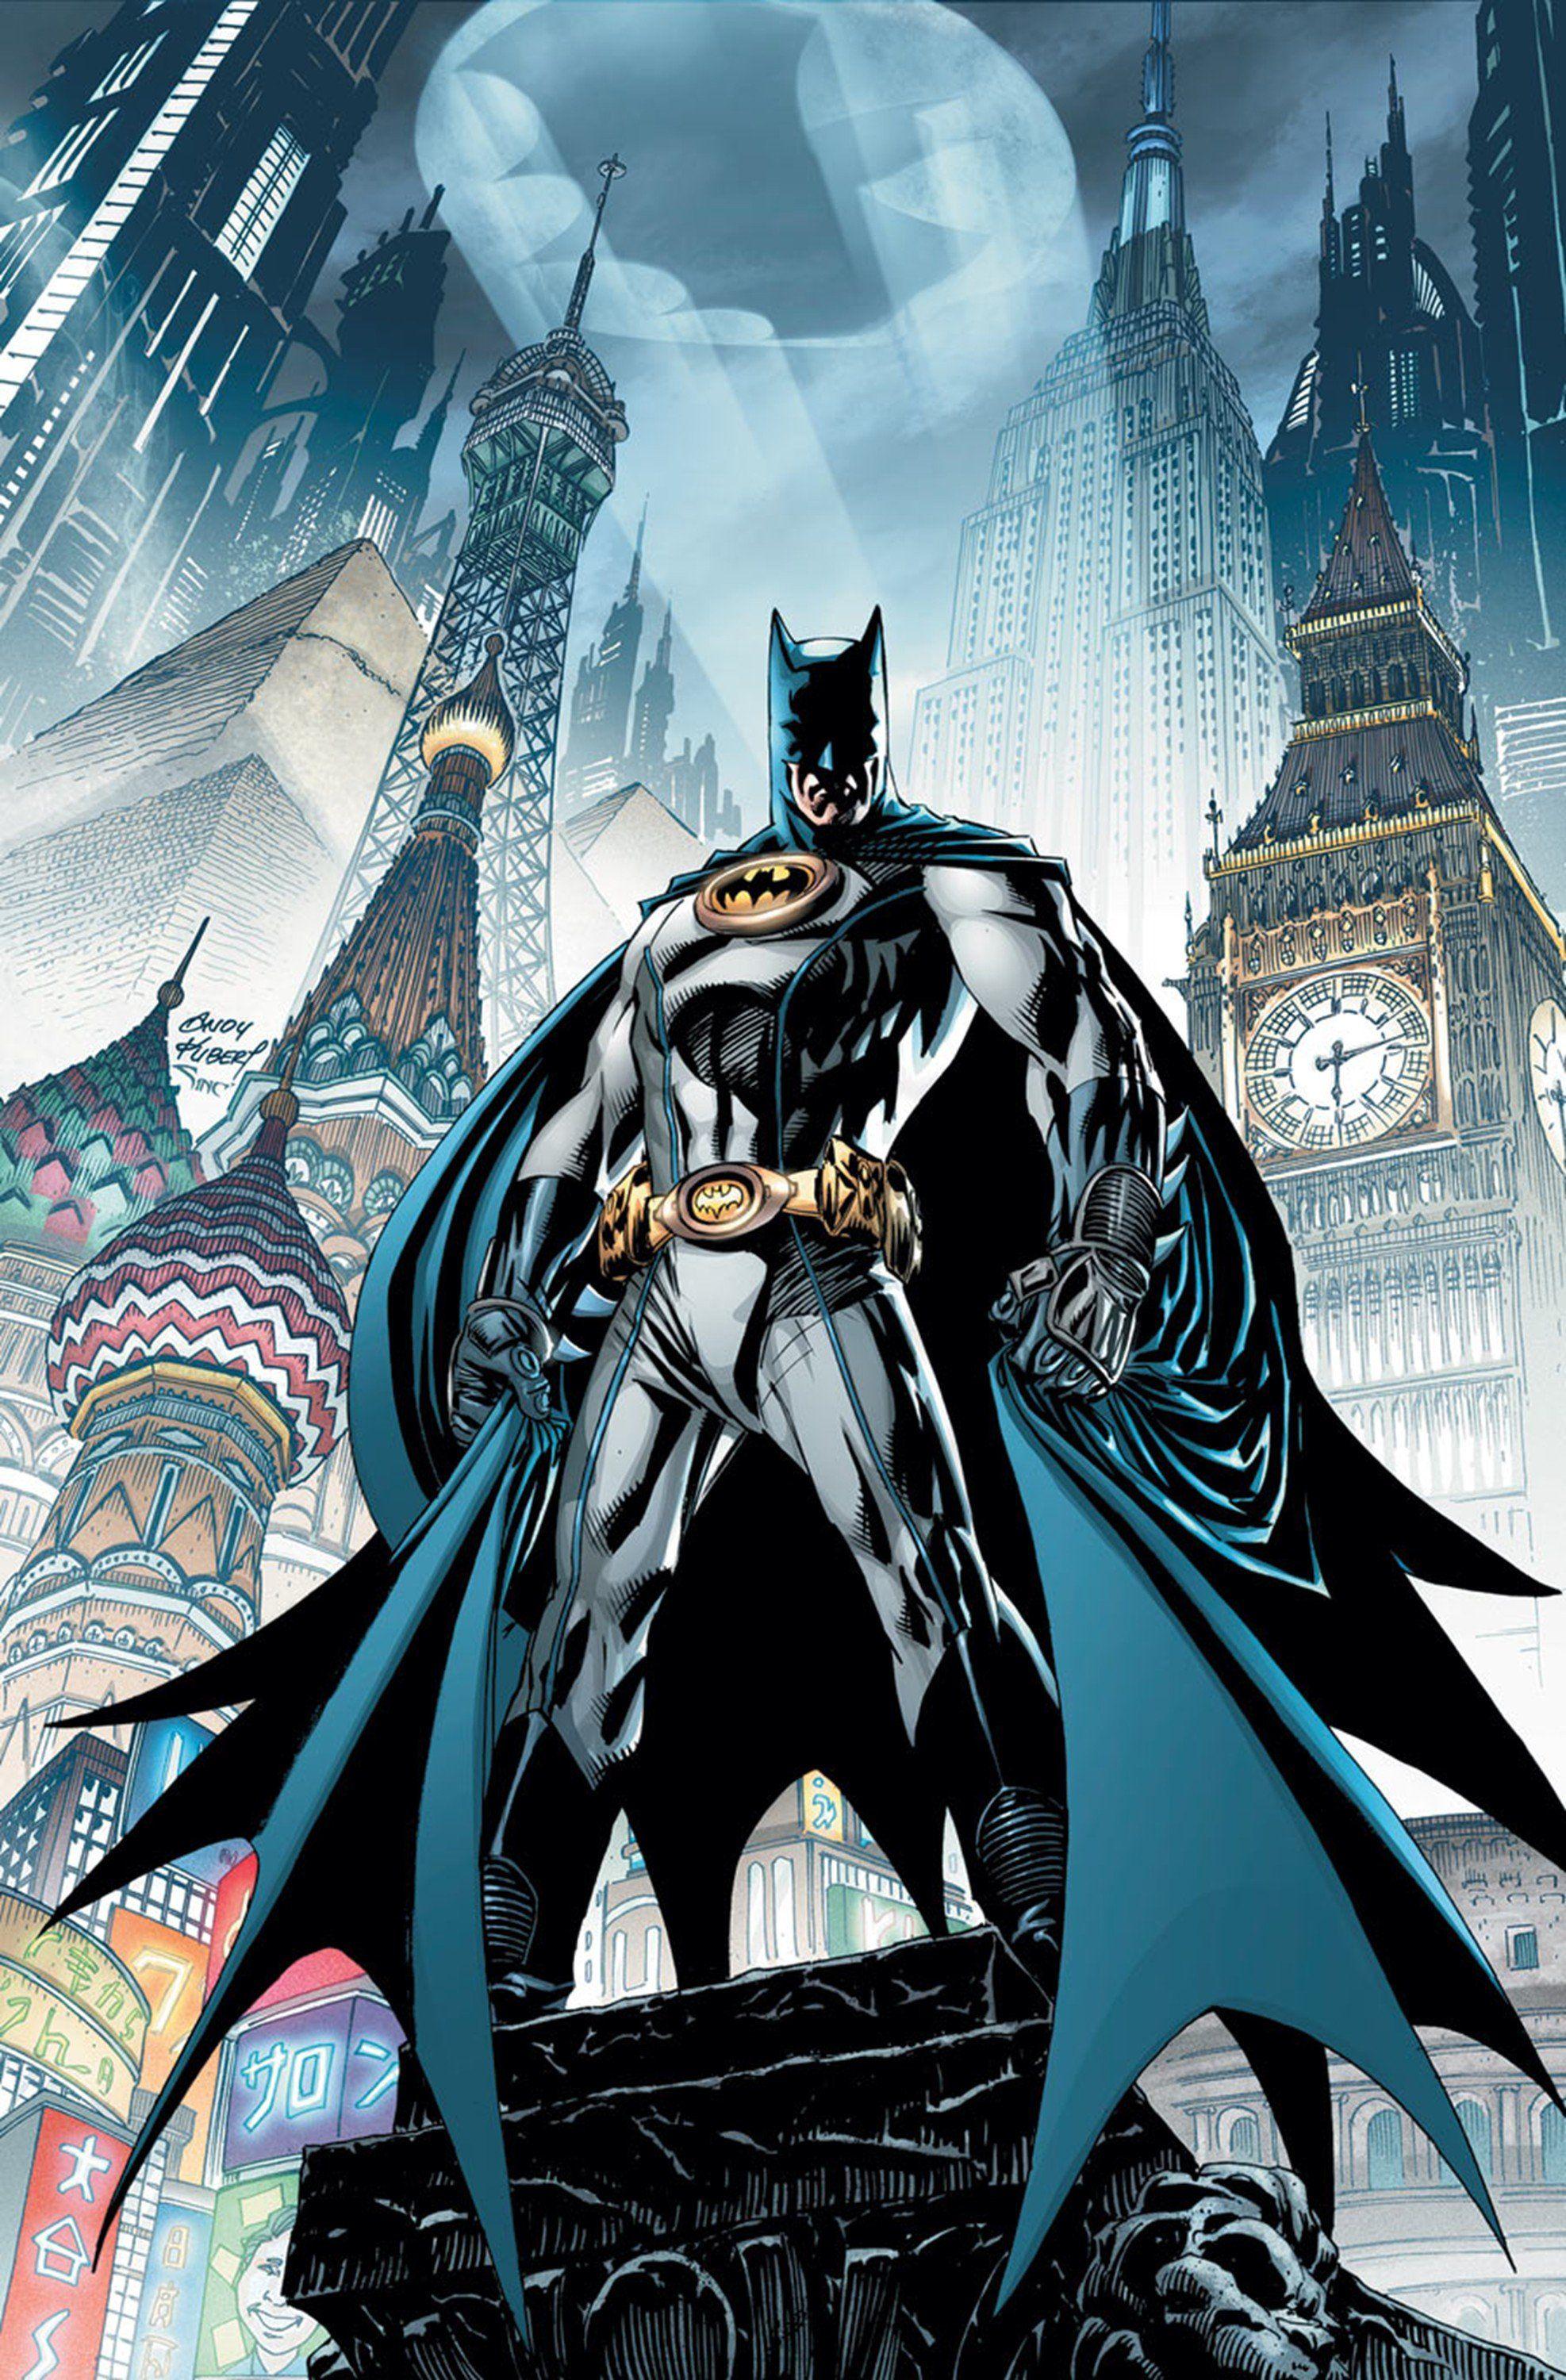 Batman Iphone Wallpapers Top Free Batman Iphone Backgrounds Wallpaperaccess